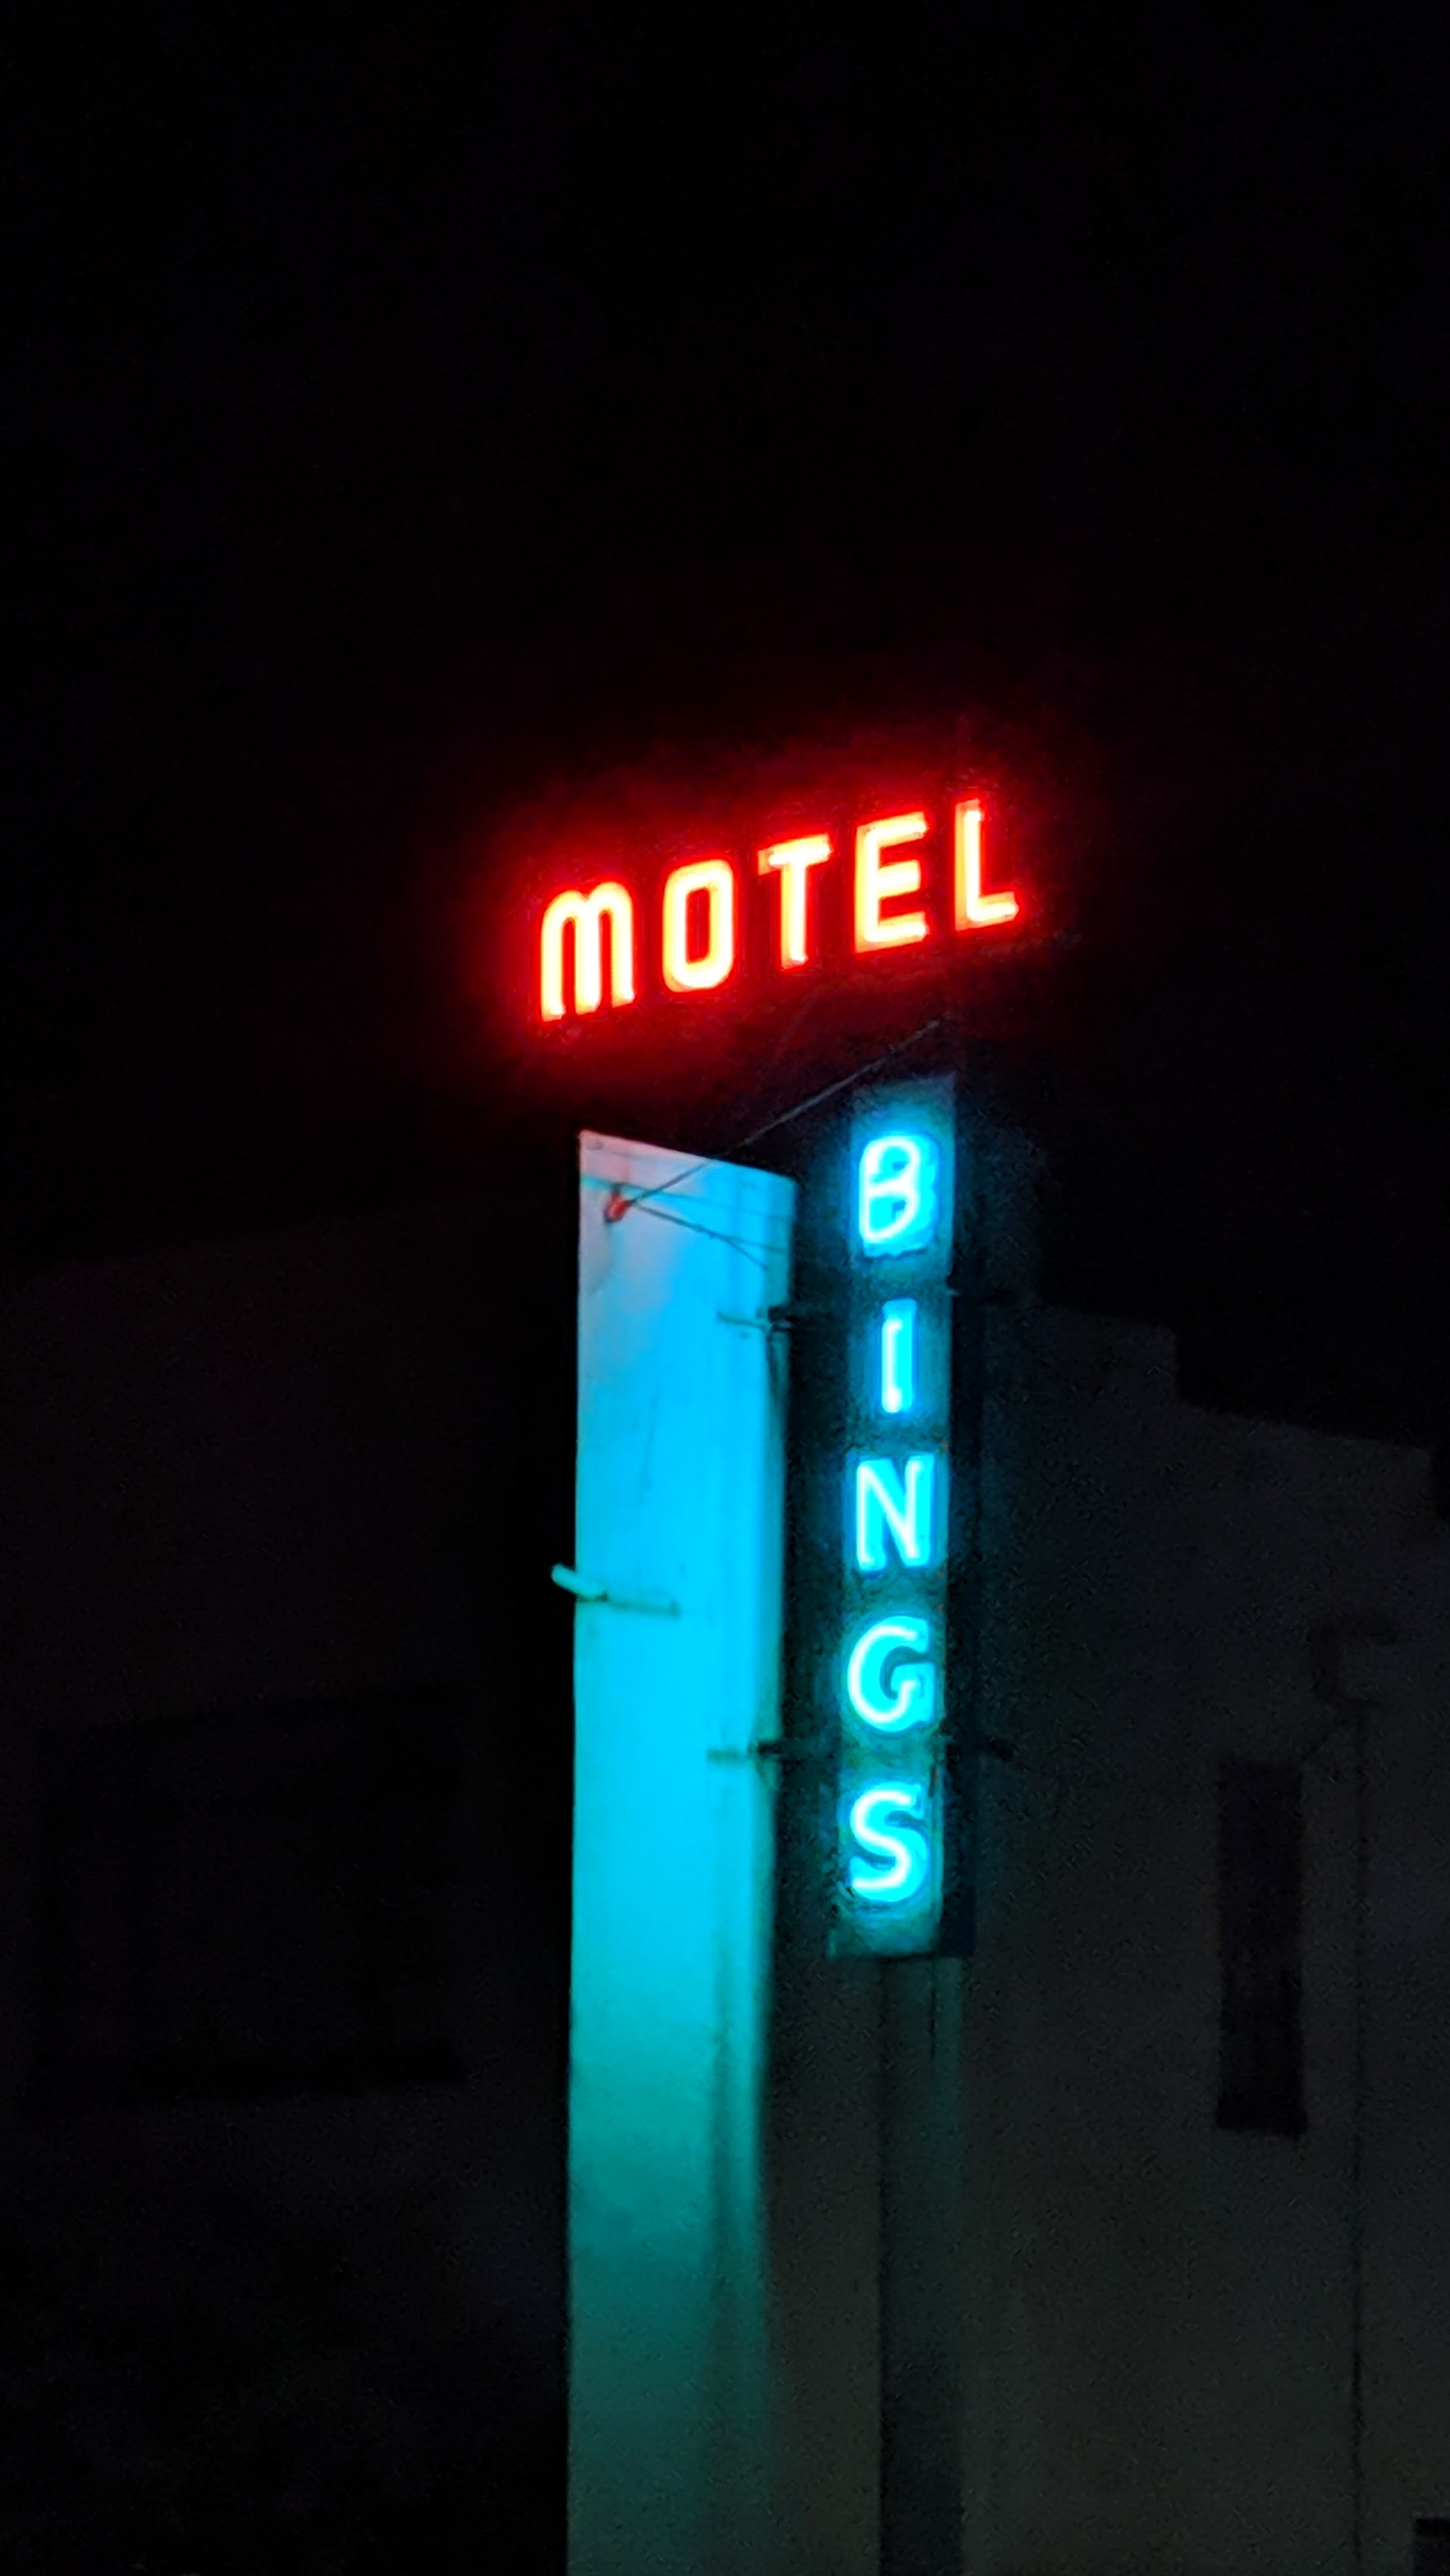 Motel Bings neon sign